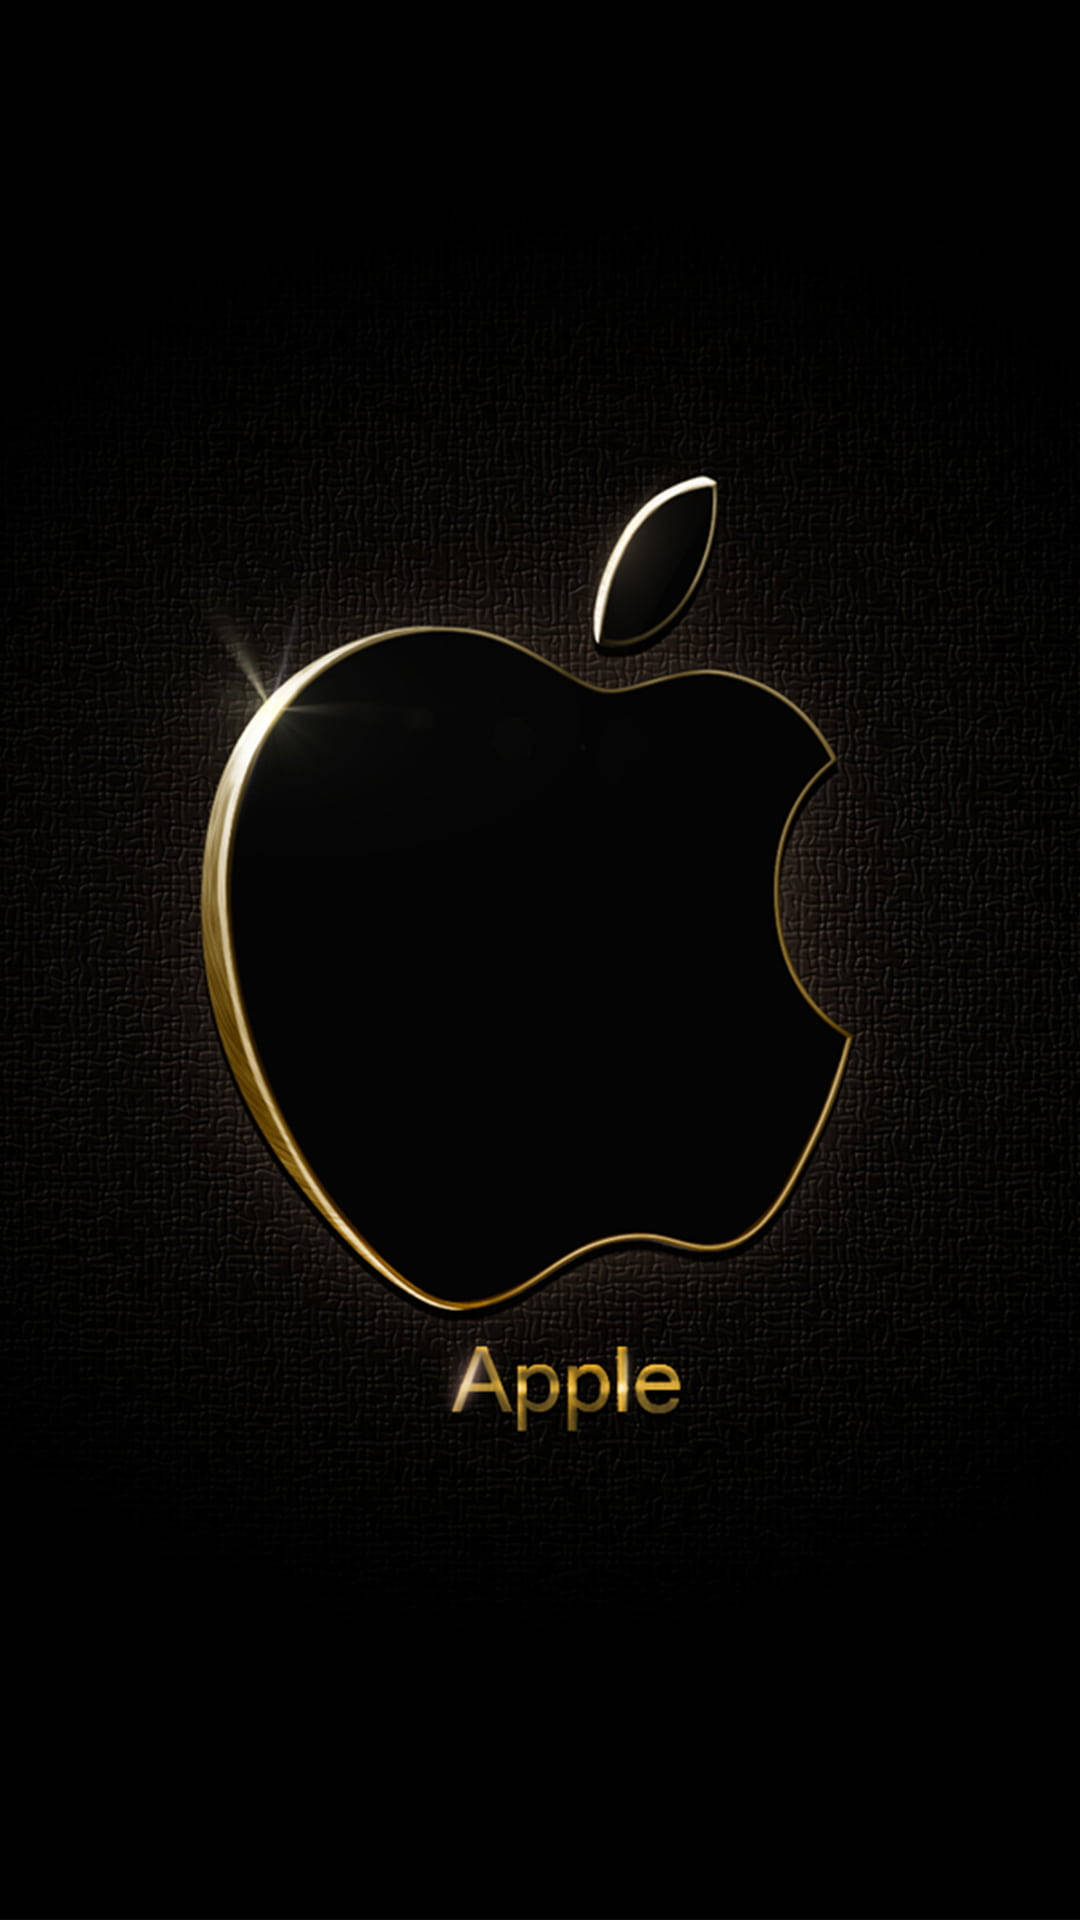 Revolving 3d Apple Iphone Logo Background